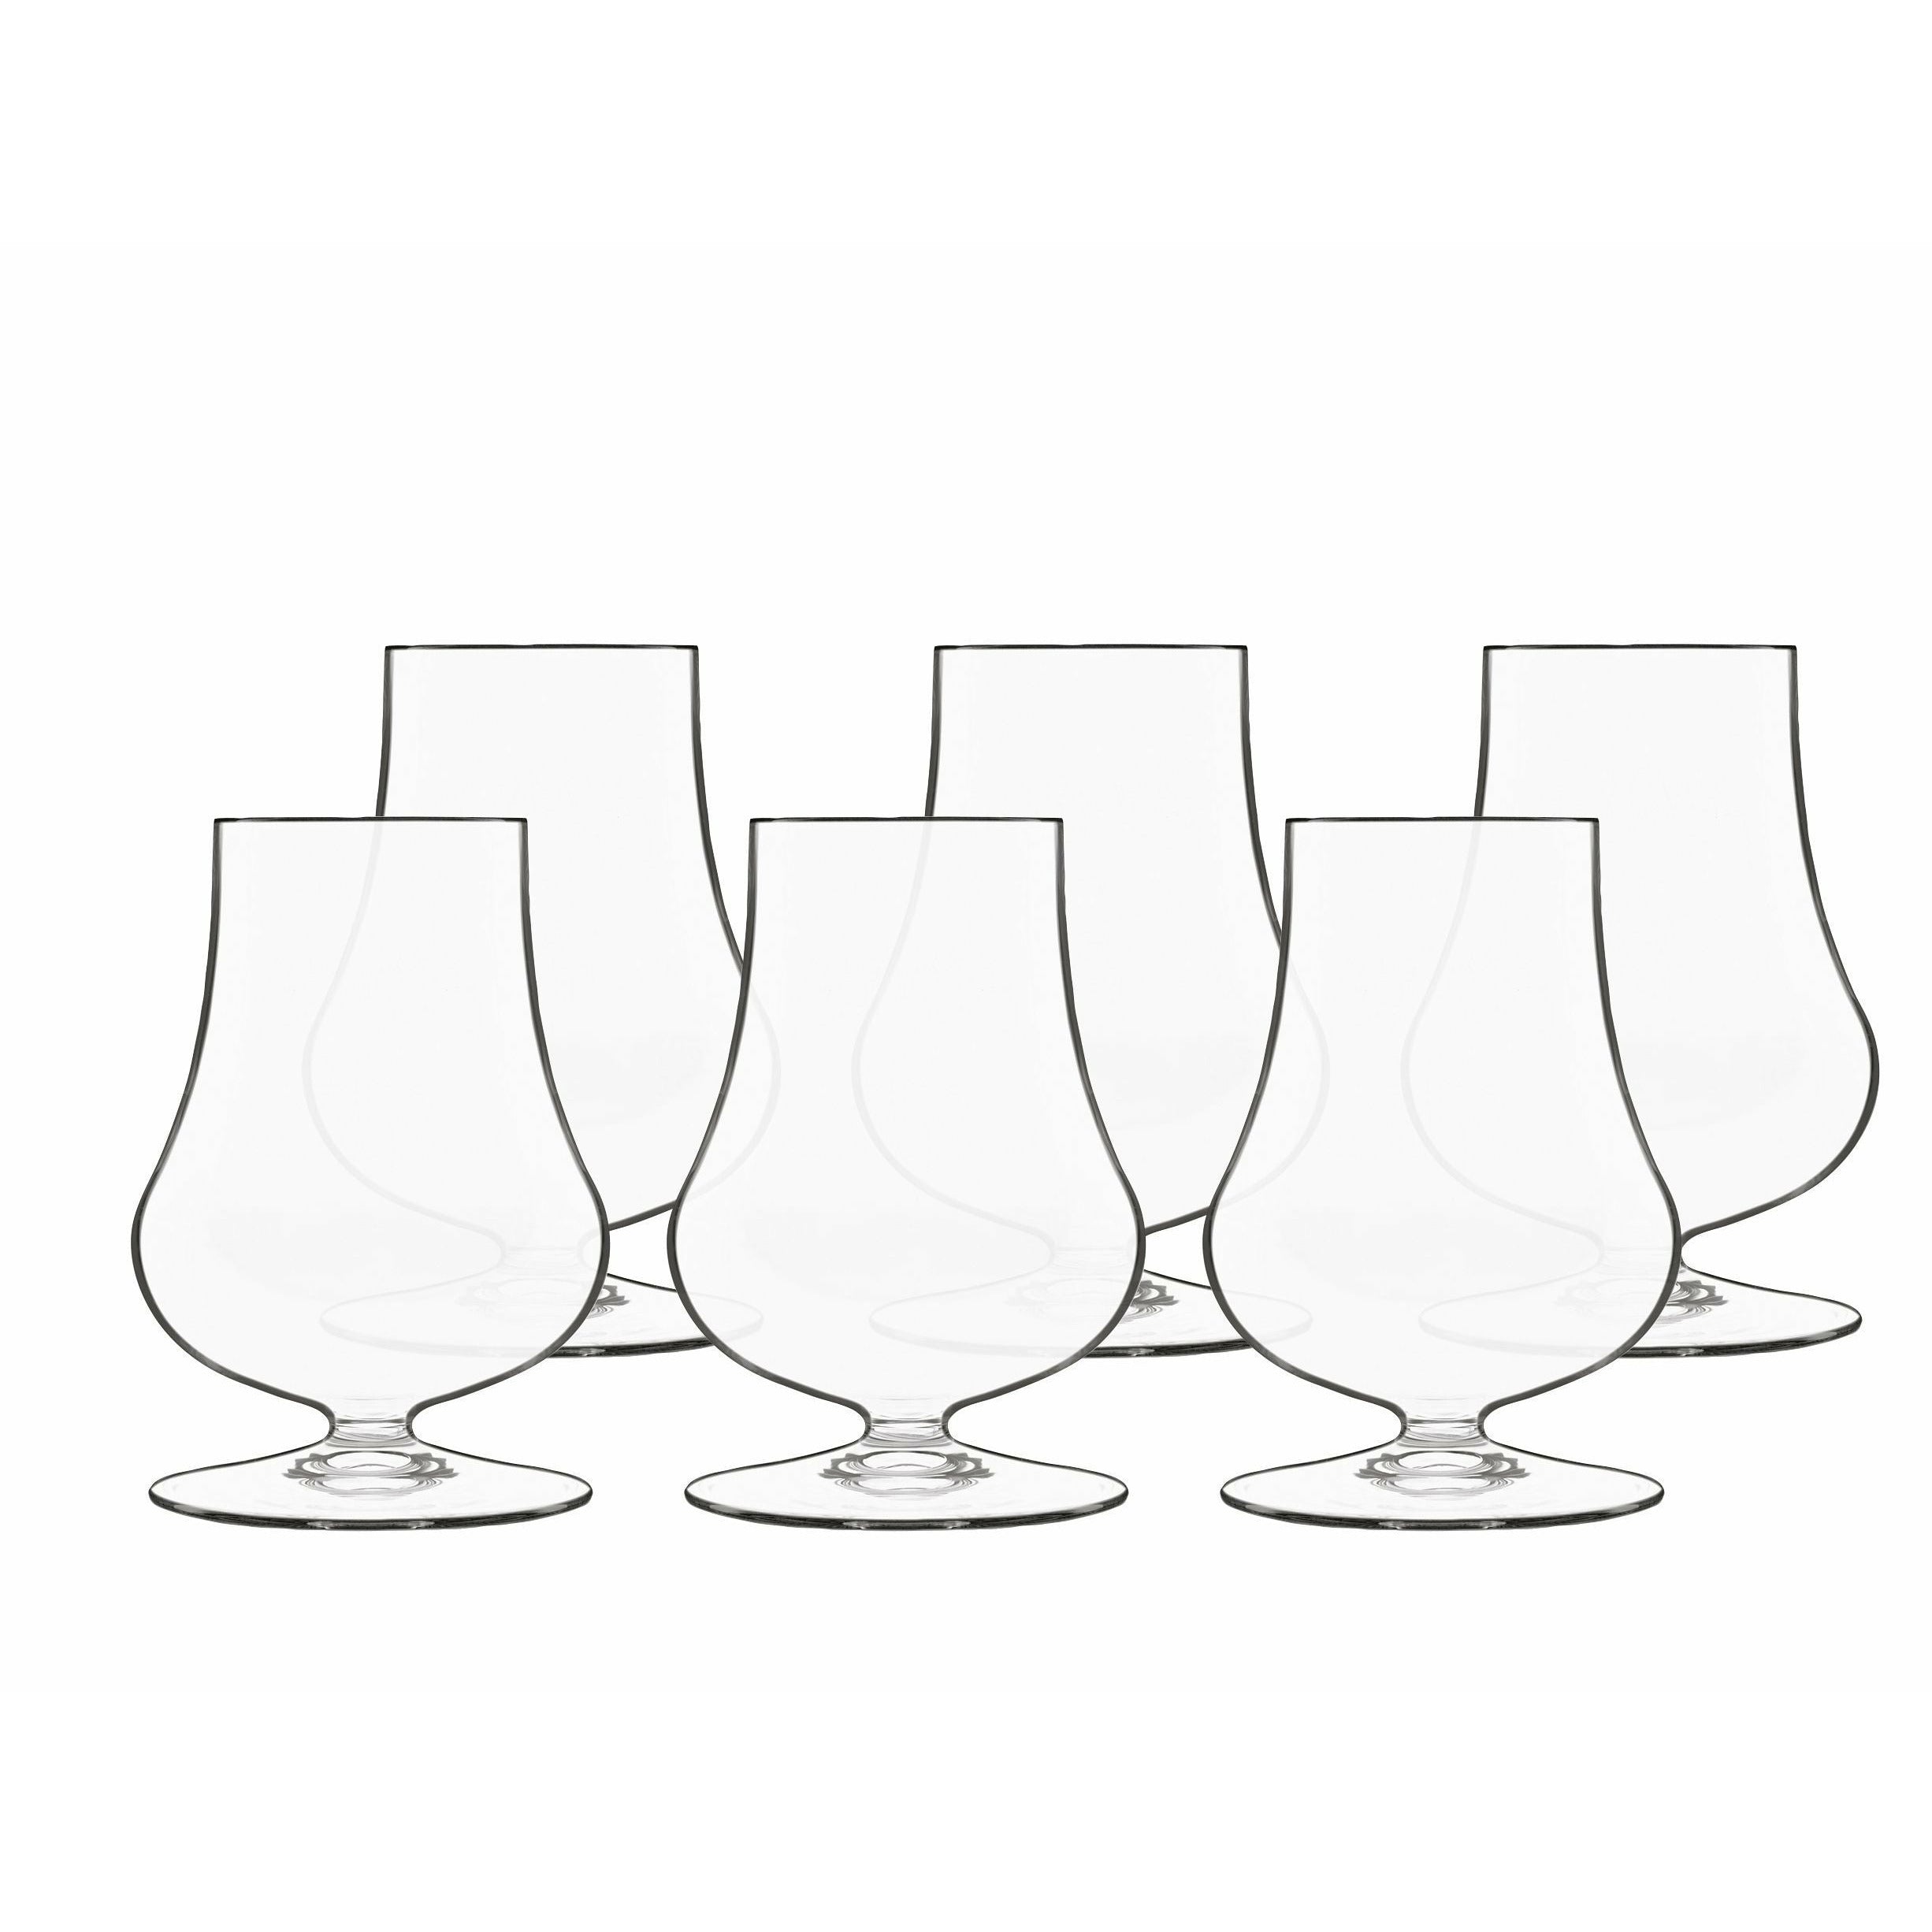 Luigi Bormioli Tentazioni Spirits Glass/Whisky Glass etter smak, sett med 6